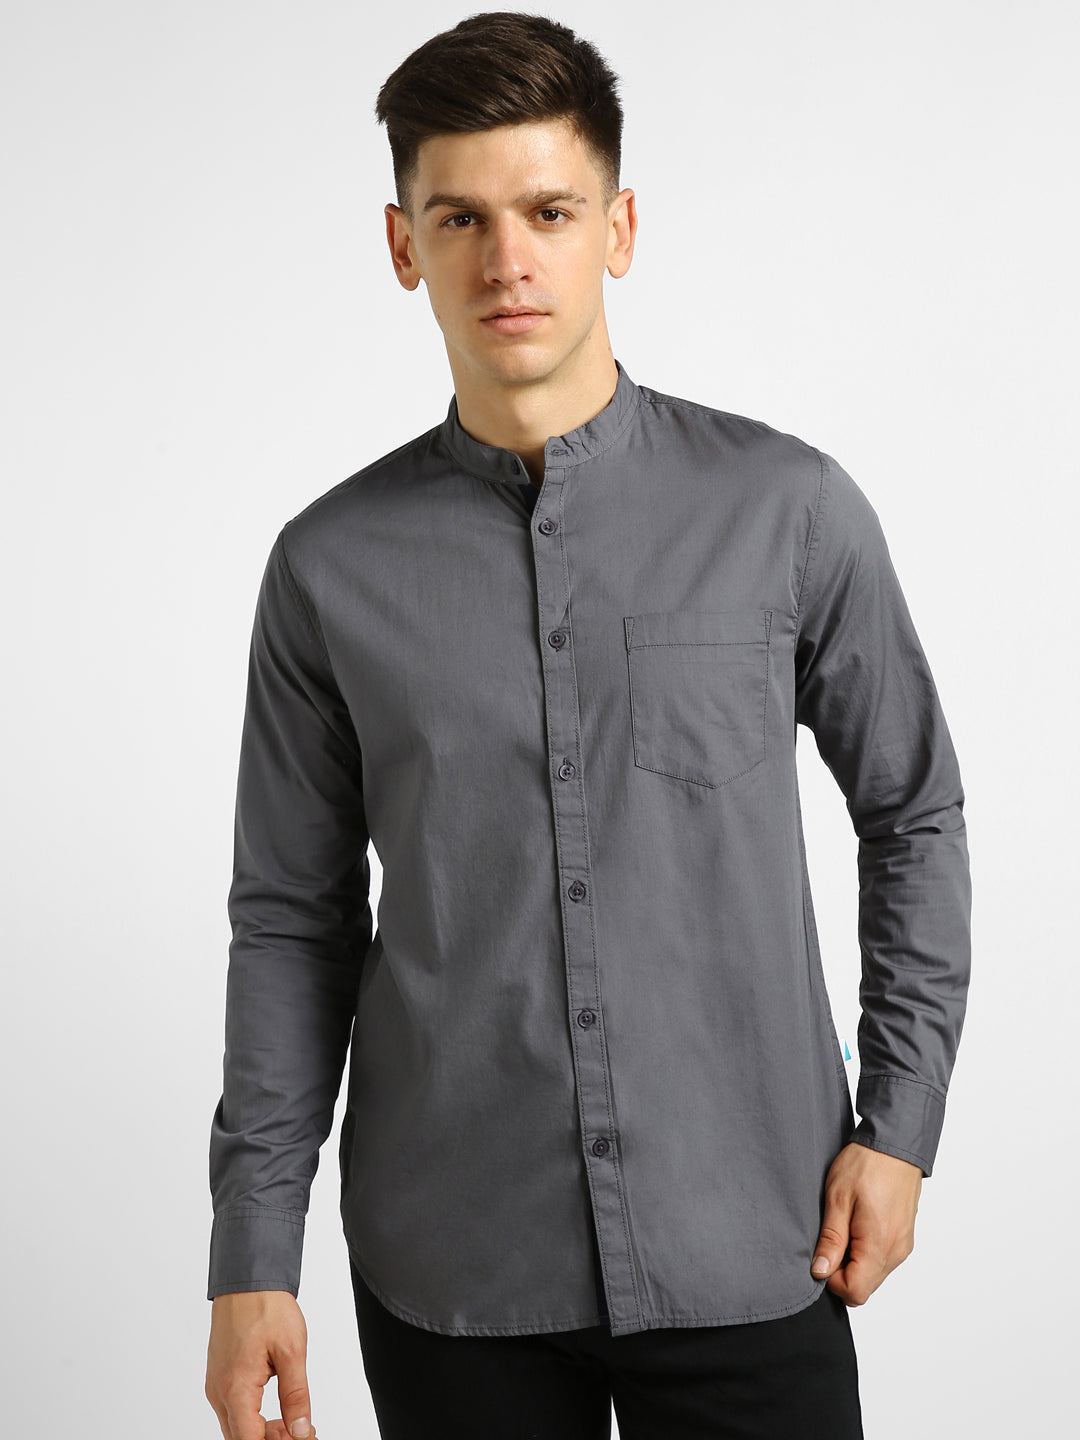 Men's Grey Cotton Full Sleeve Slim Fit Solid Shirt with Mandarin Collar